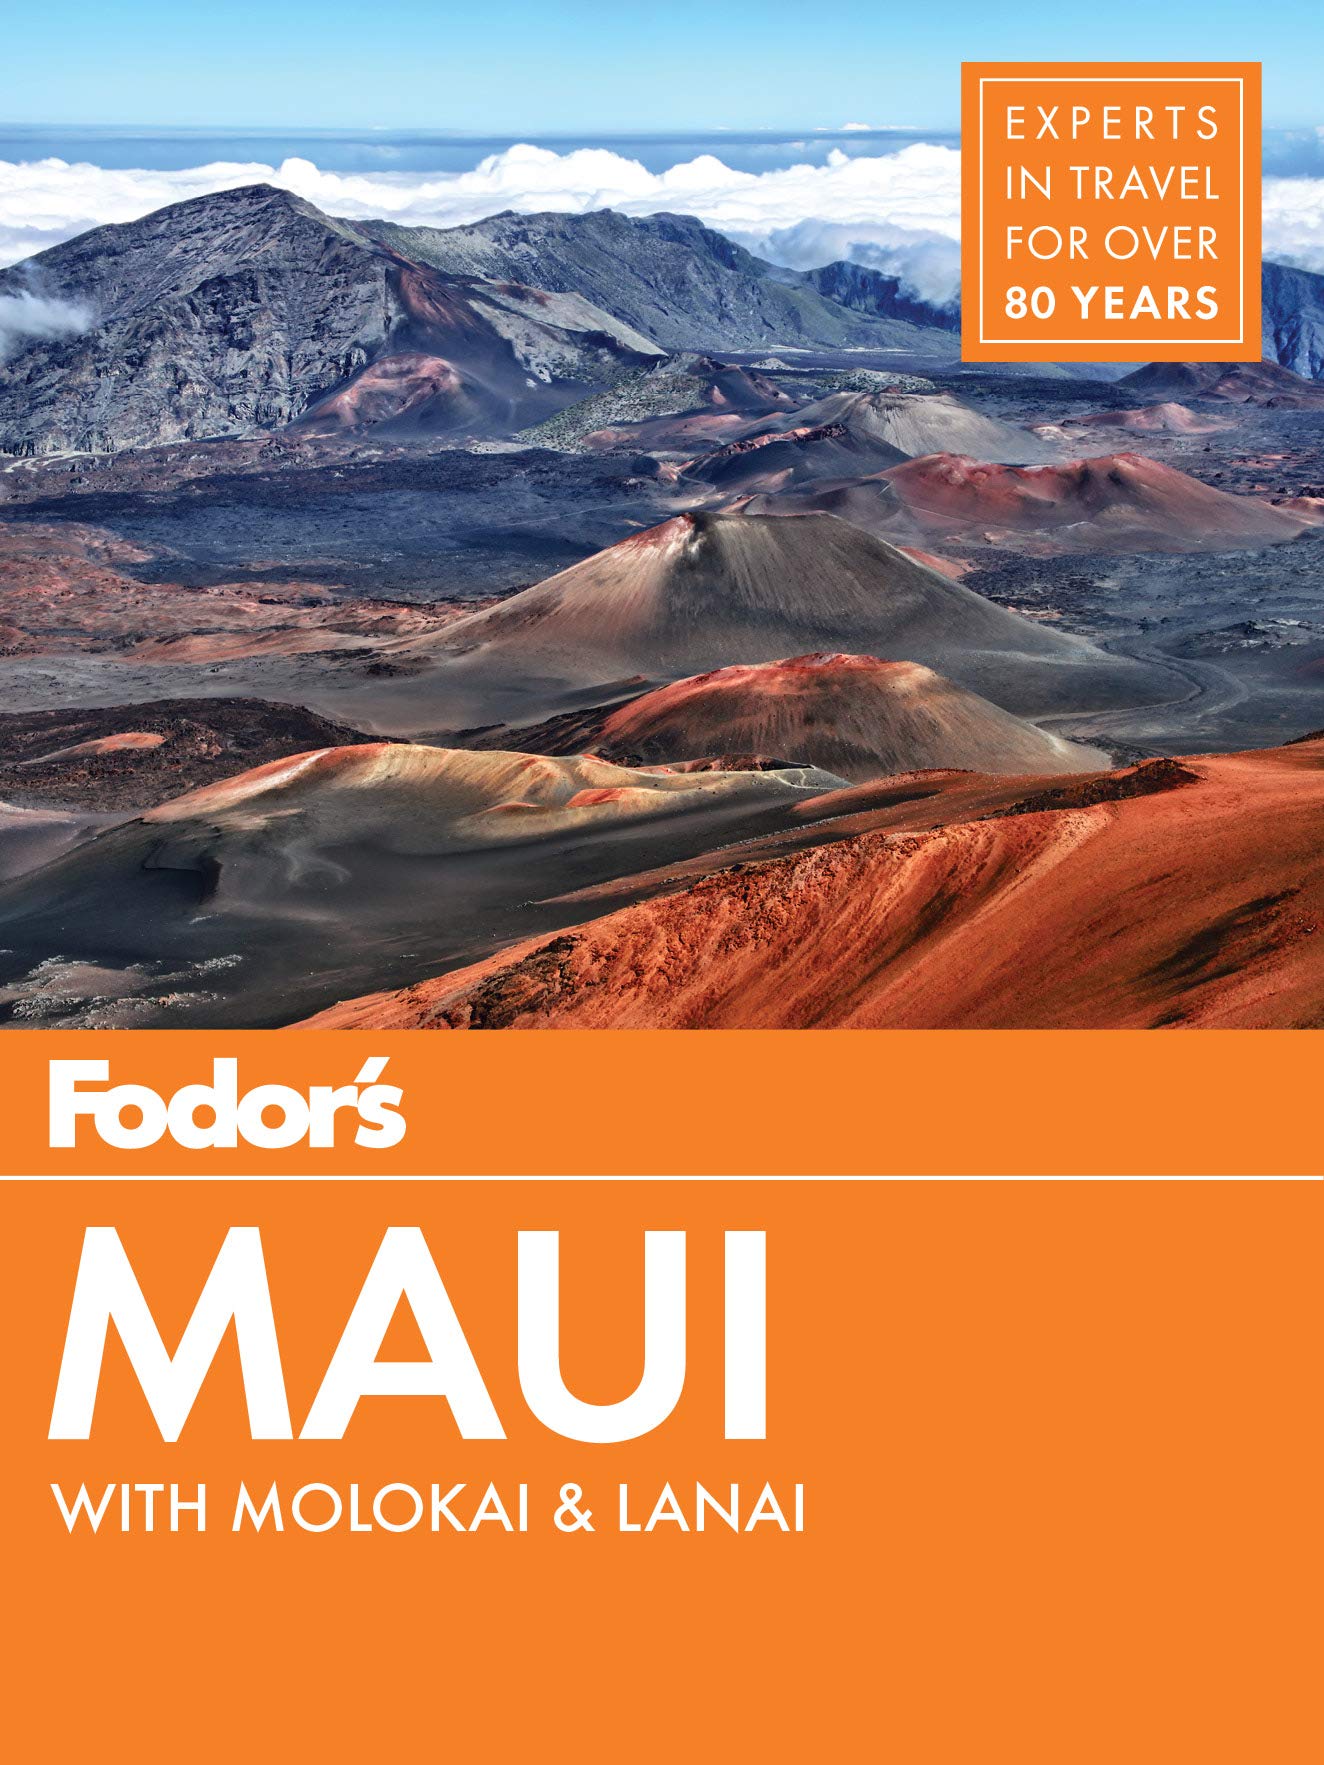 Fodor's Maui with Molokai & Lanai 18e